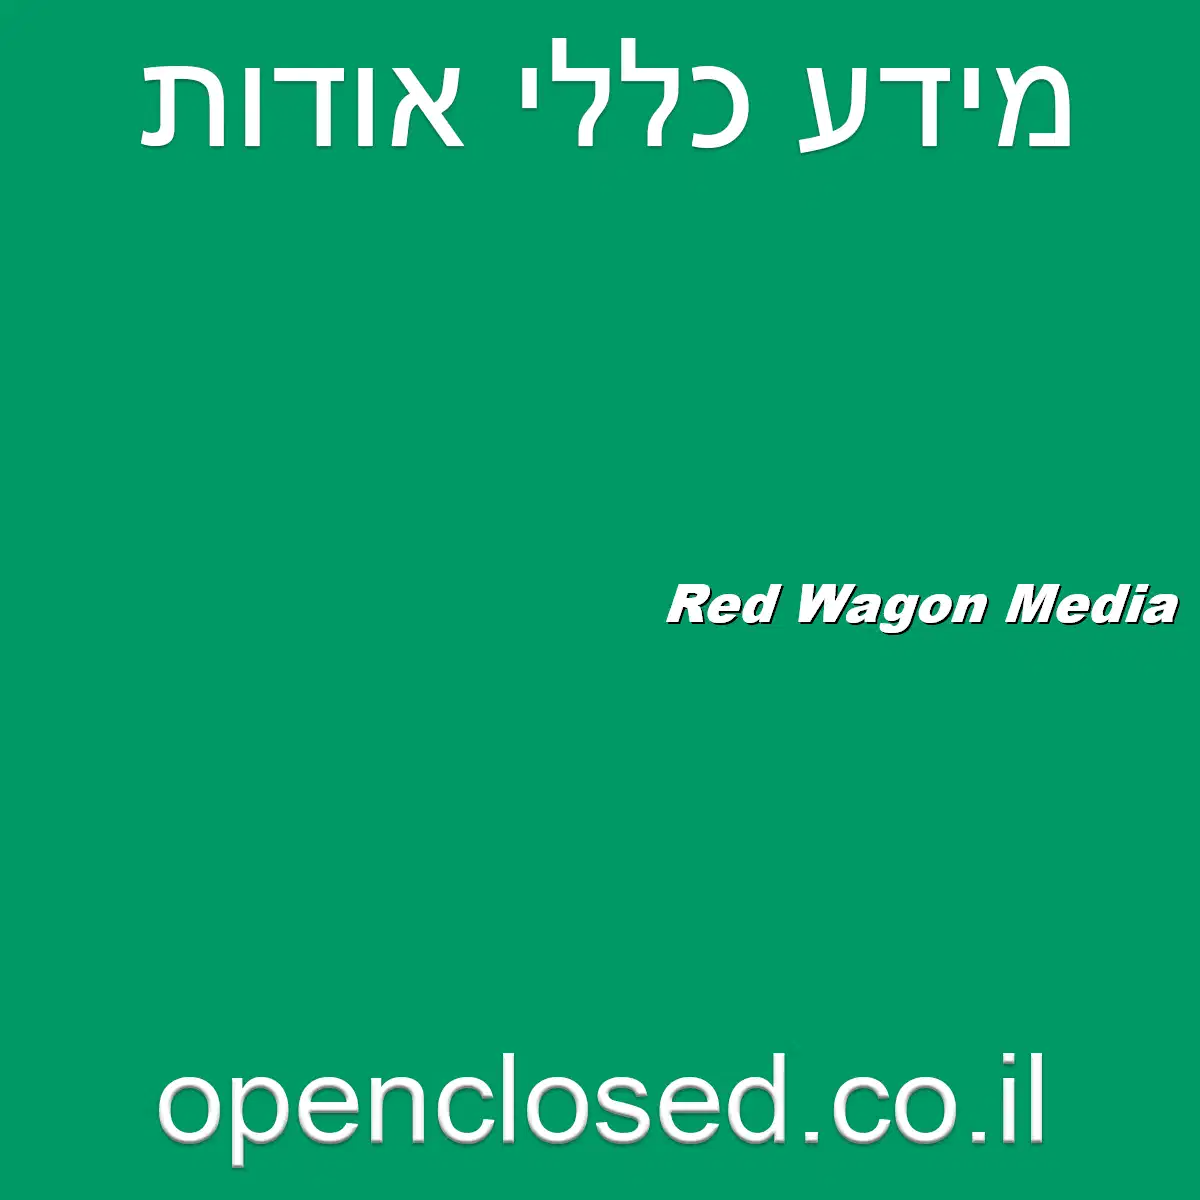 Red Wagon Media